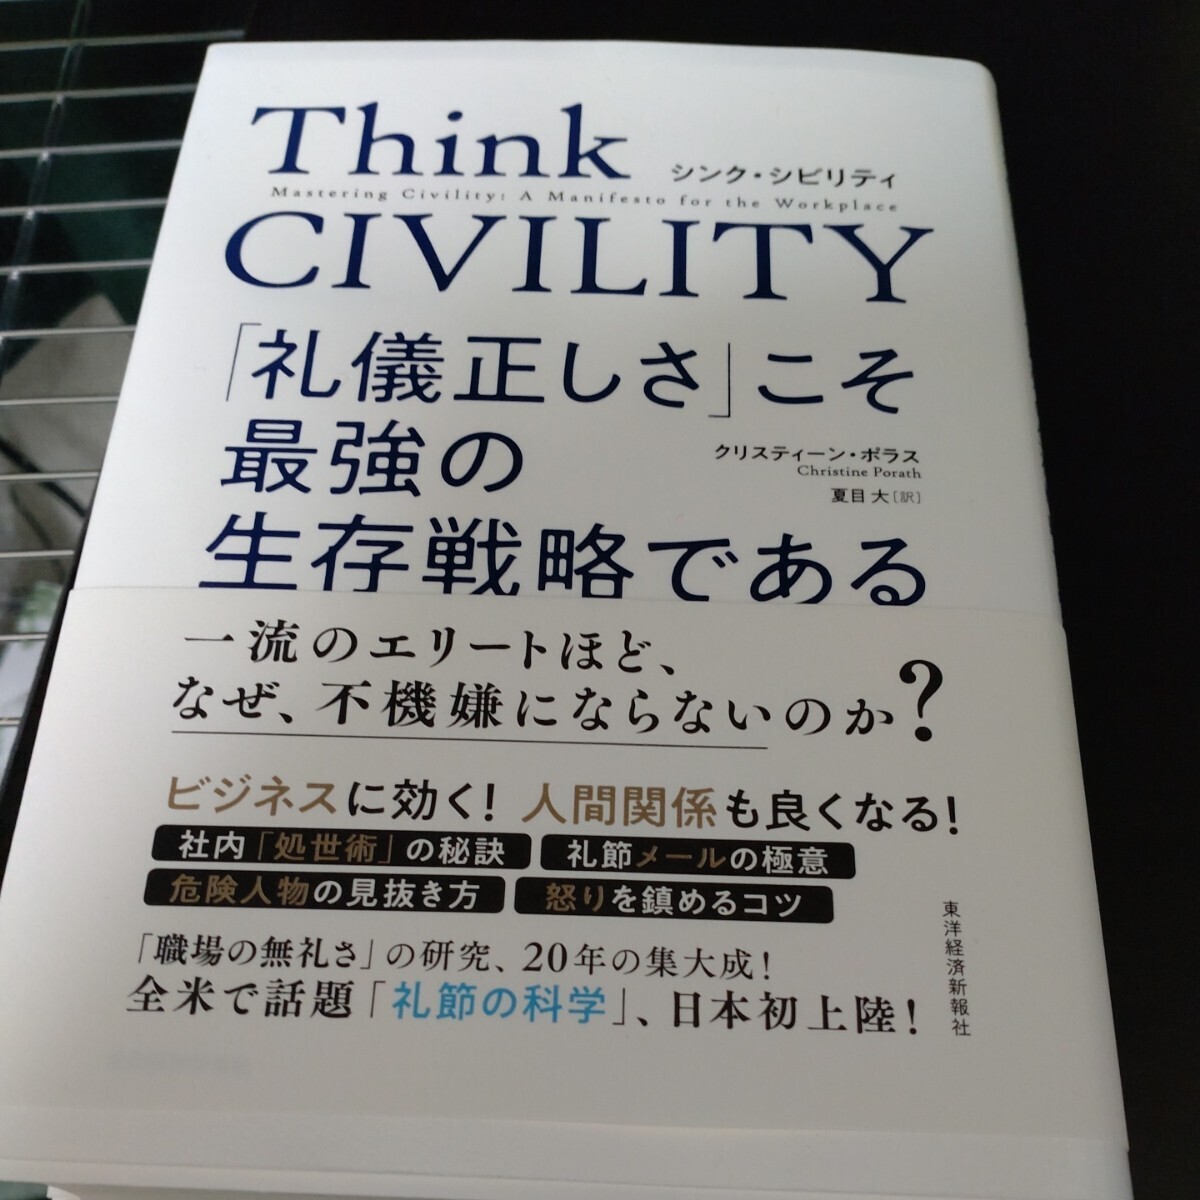 Think CIVILITY_画像1